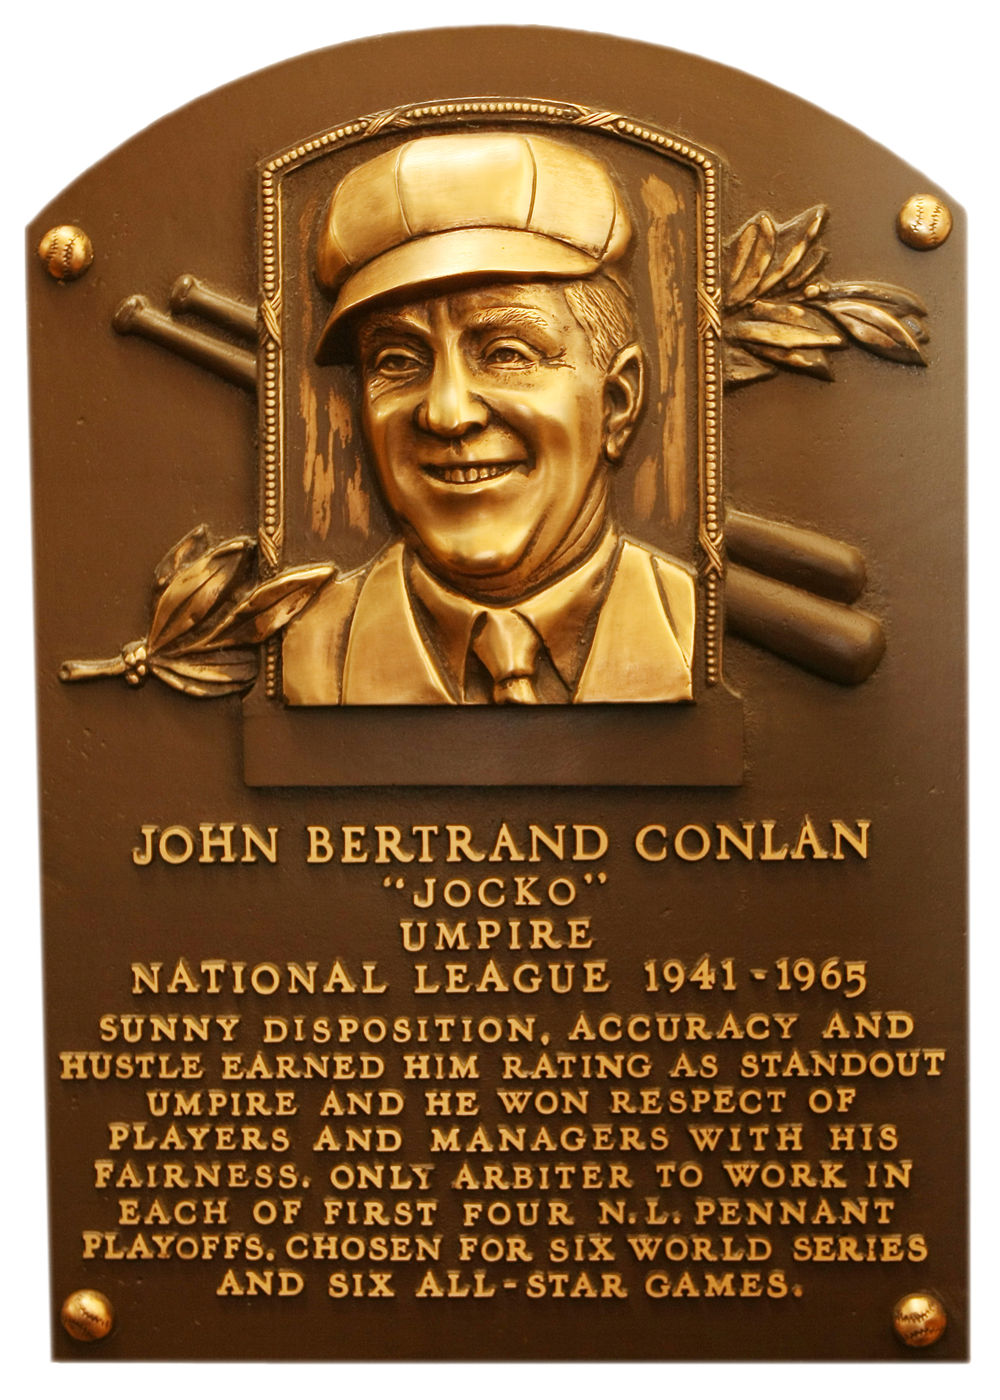 Jocko Conlan Hall of Fame plaque